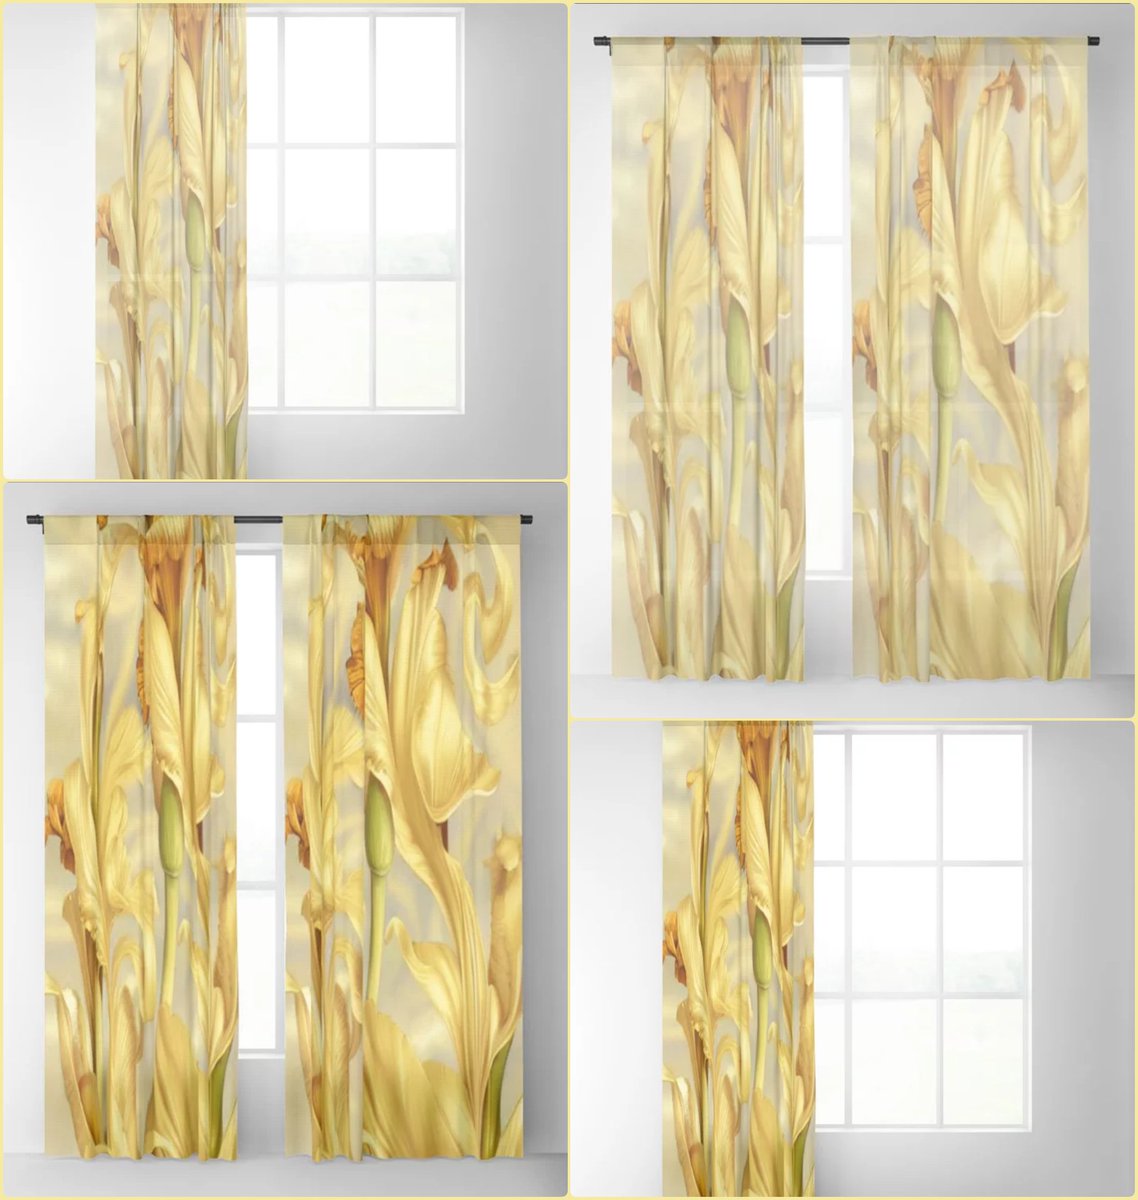 Resplendent Iris Blackout Curtain~Be Artful~ #artfalaxy #art #curtains #drapes #homedecor #society6 #Society6max #swirls #accents #sheercurtains #windowtreatments #blackoutcurtains #green #yellow #golden society6.com/product/resple…